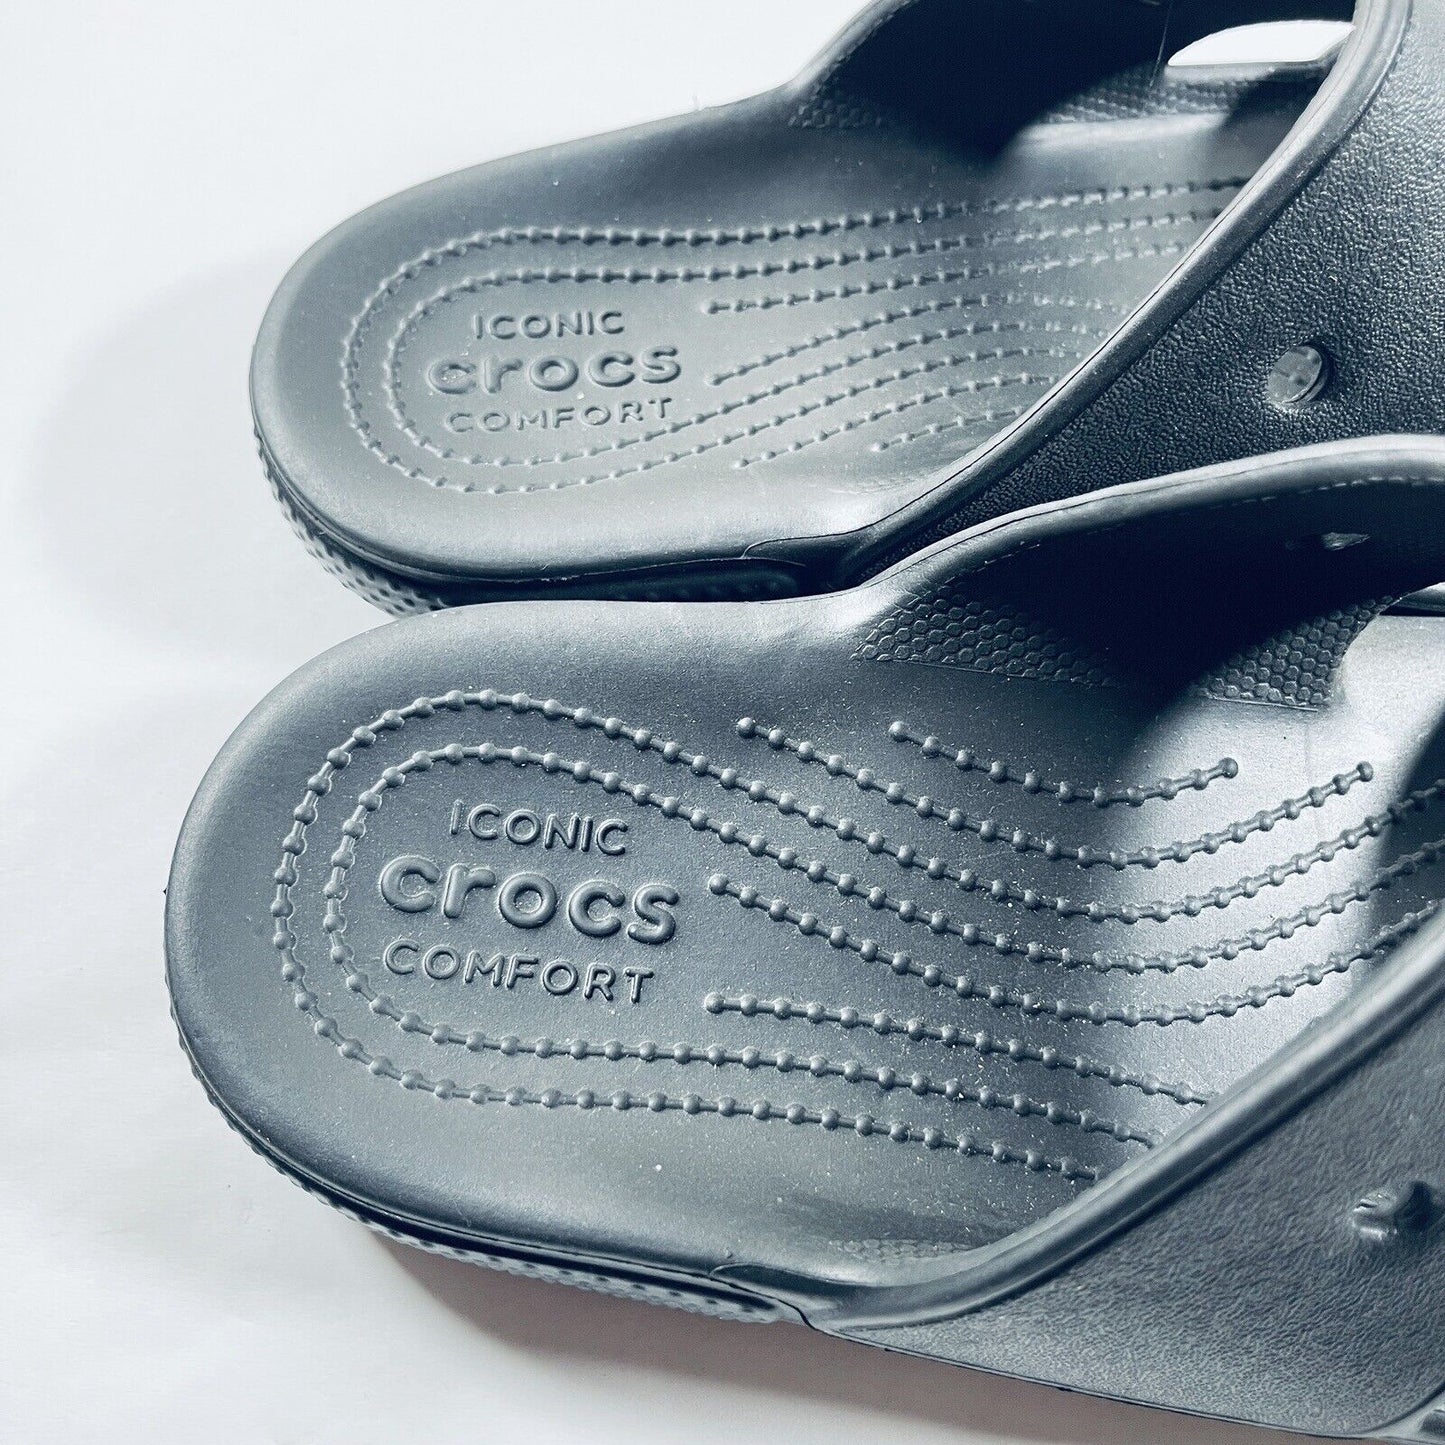 Crocs Classic Two Strap Black Slide Sandals Mens Size 7 Womens Size 9